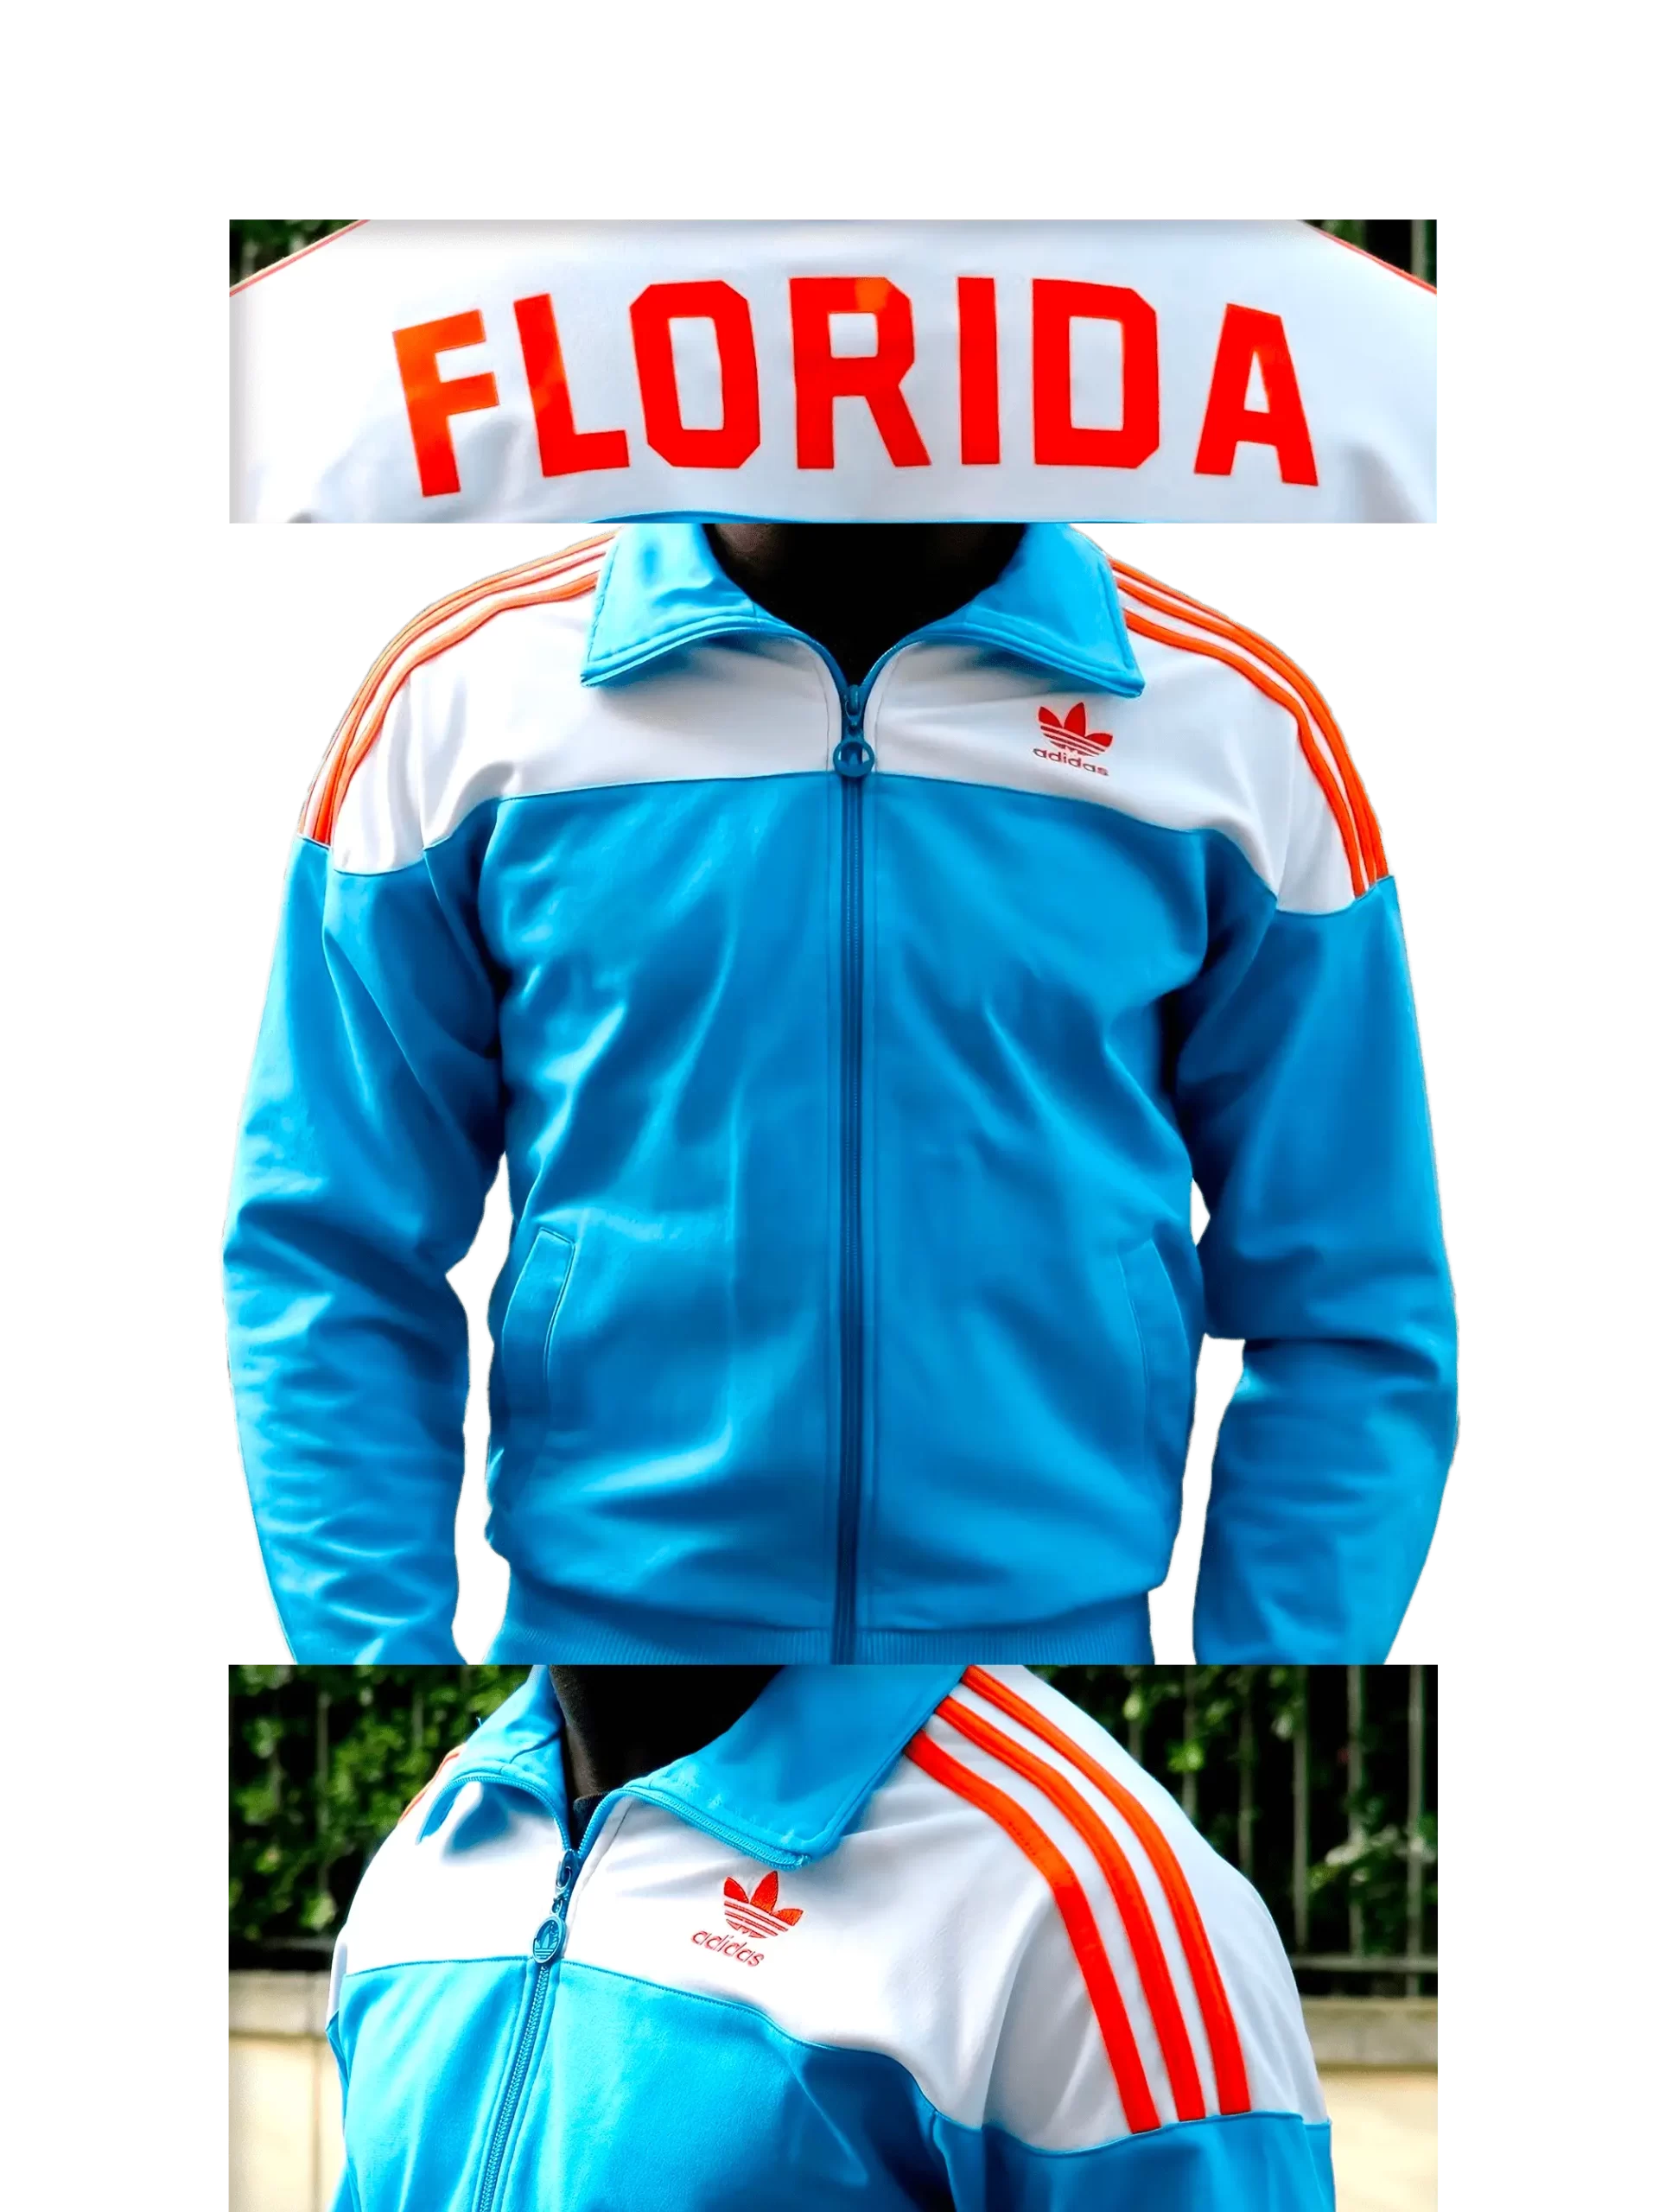 Men's 2005 Florida State TT by Adidas Originals: Zen (EnLawded.com file #lmchk79689ip2y124803kg9st)